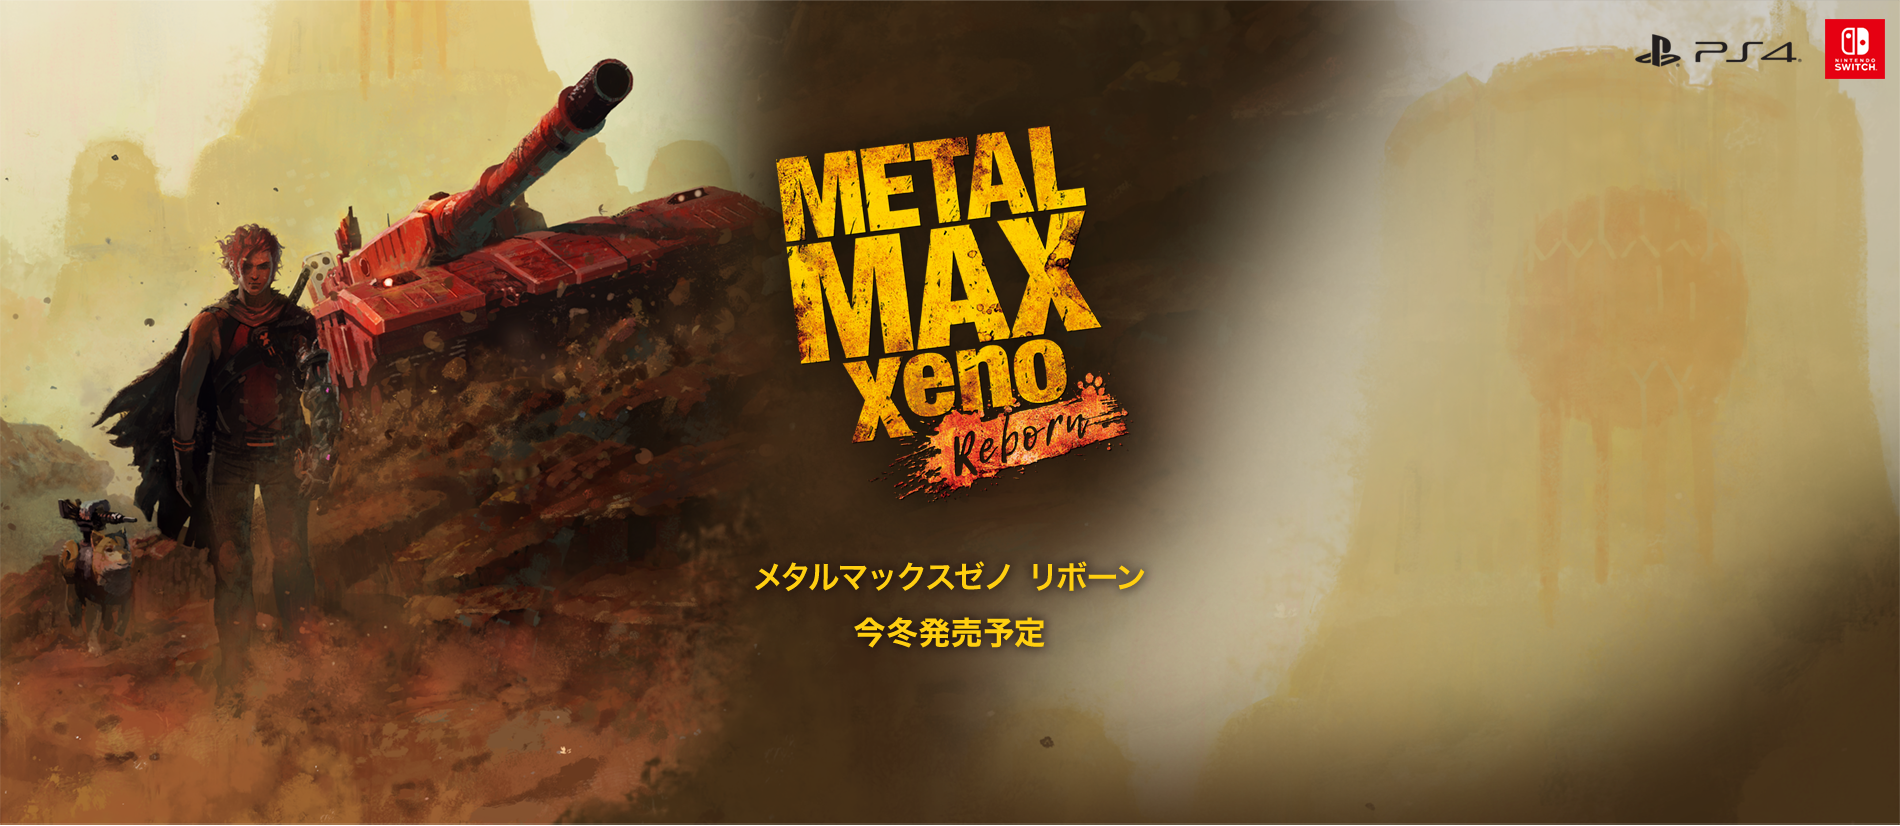 Metal-Max-Xeno-Reborn_2019_10-01-19_001.